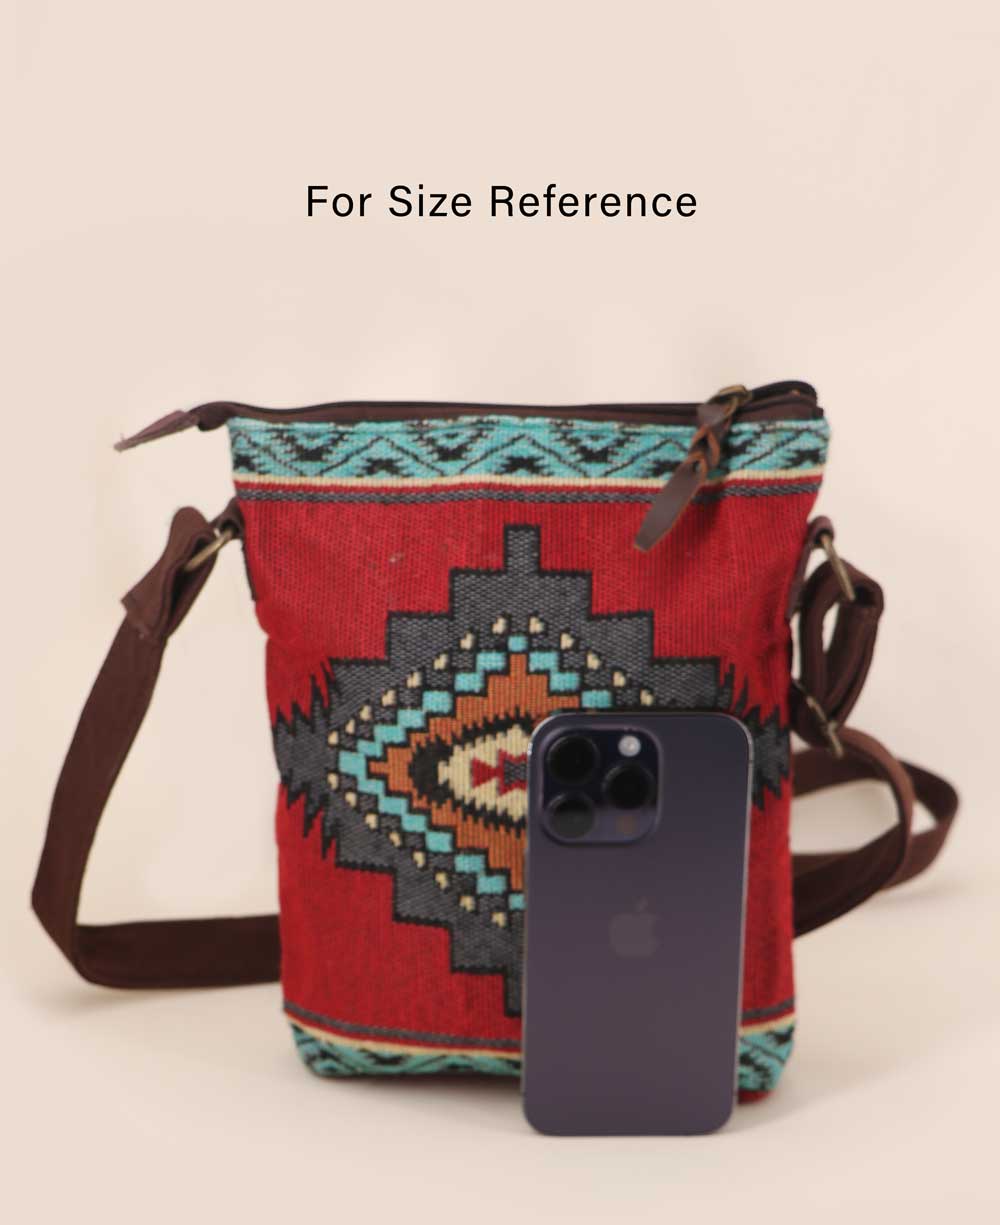 Artisan Tribal Woven Textile Crossbody Bag with Adjustable Strap